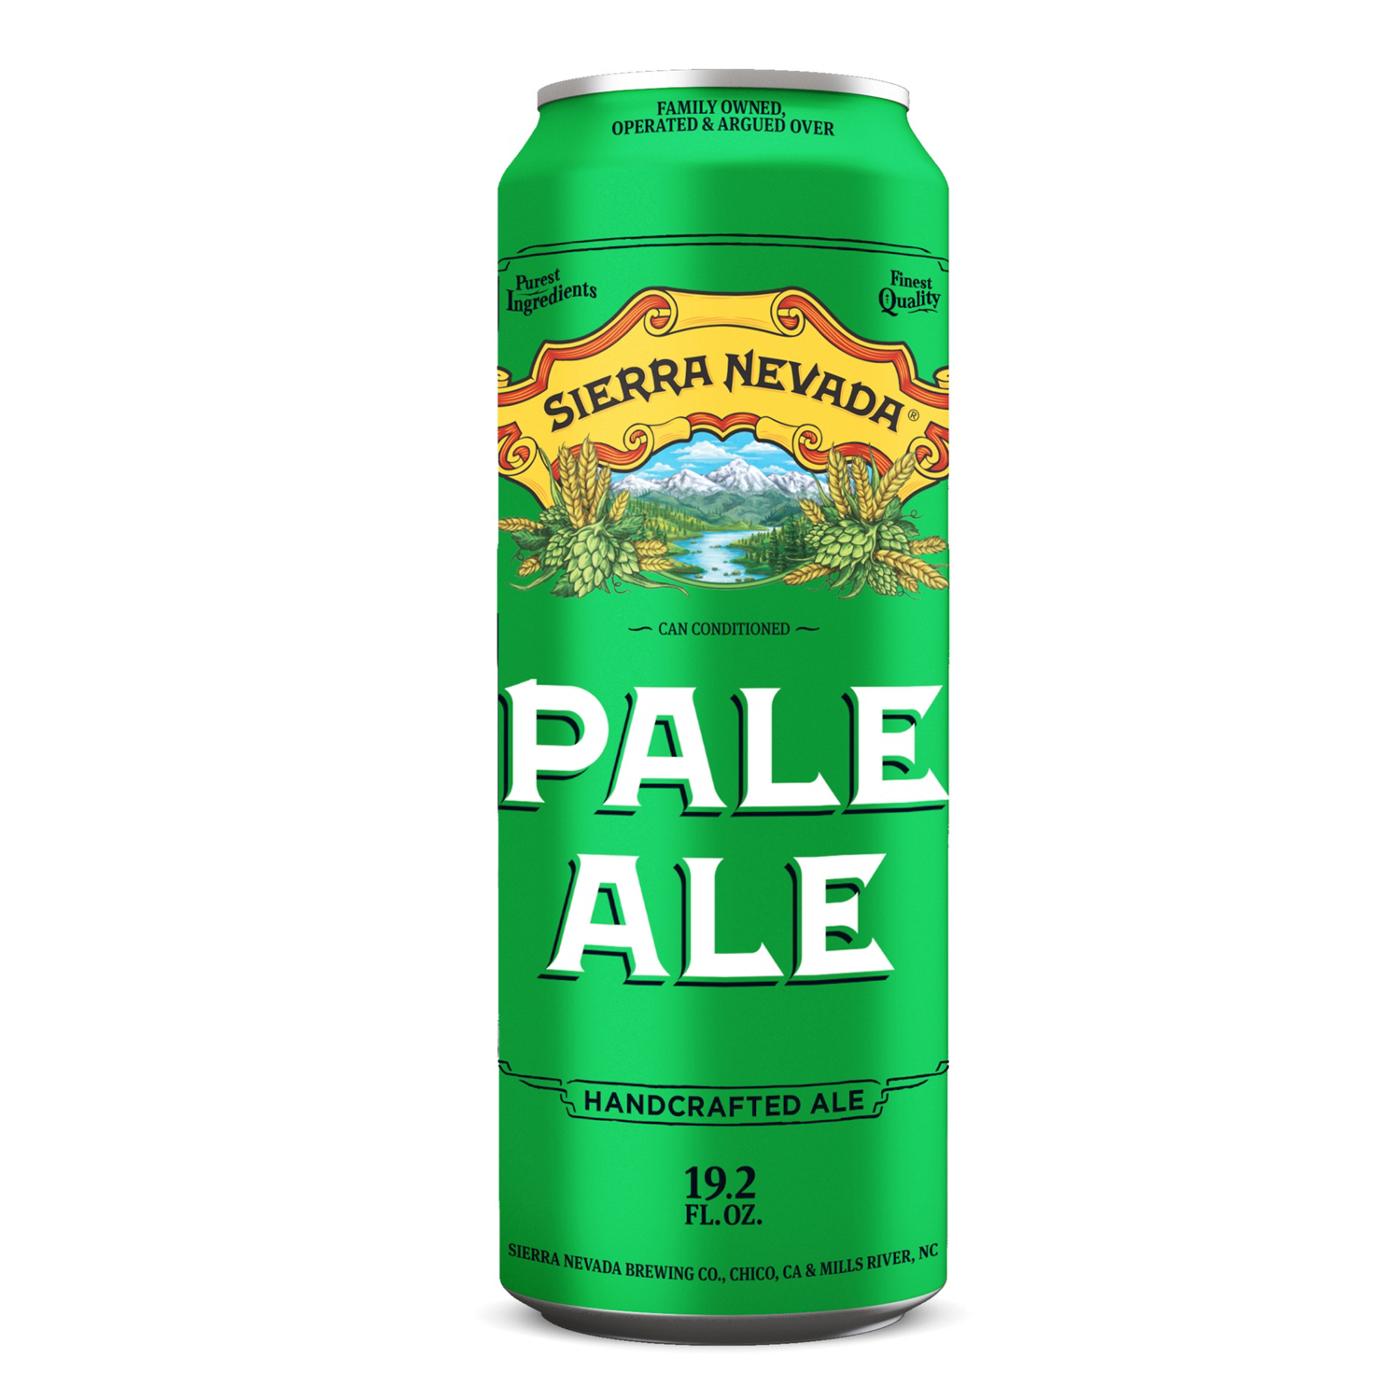 Sierra Nevada Pale Ale; image 1 of 5